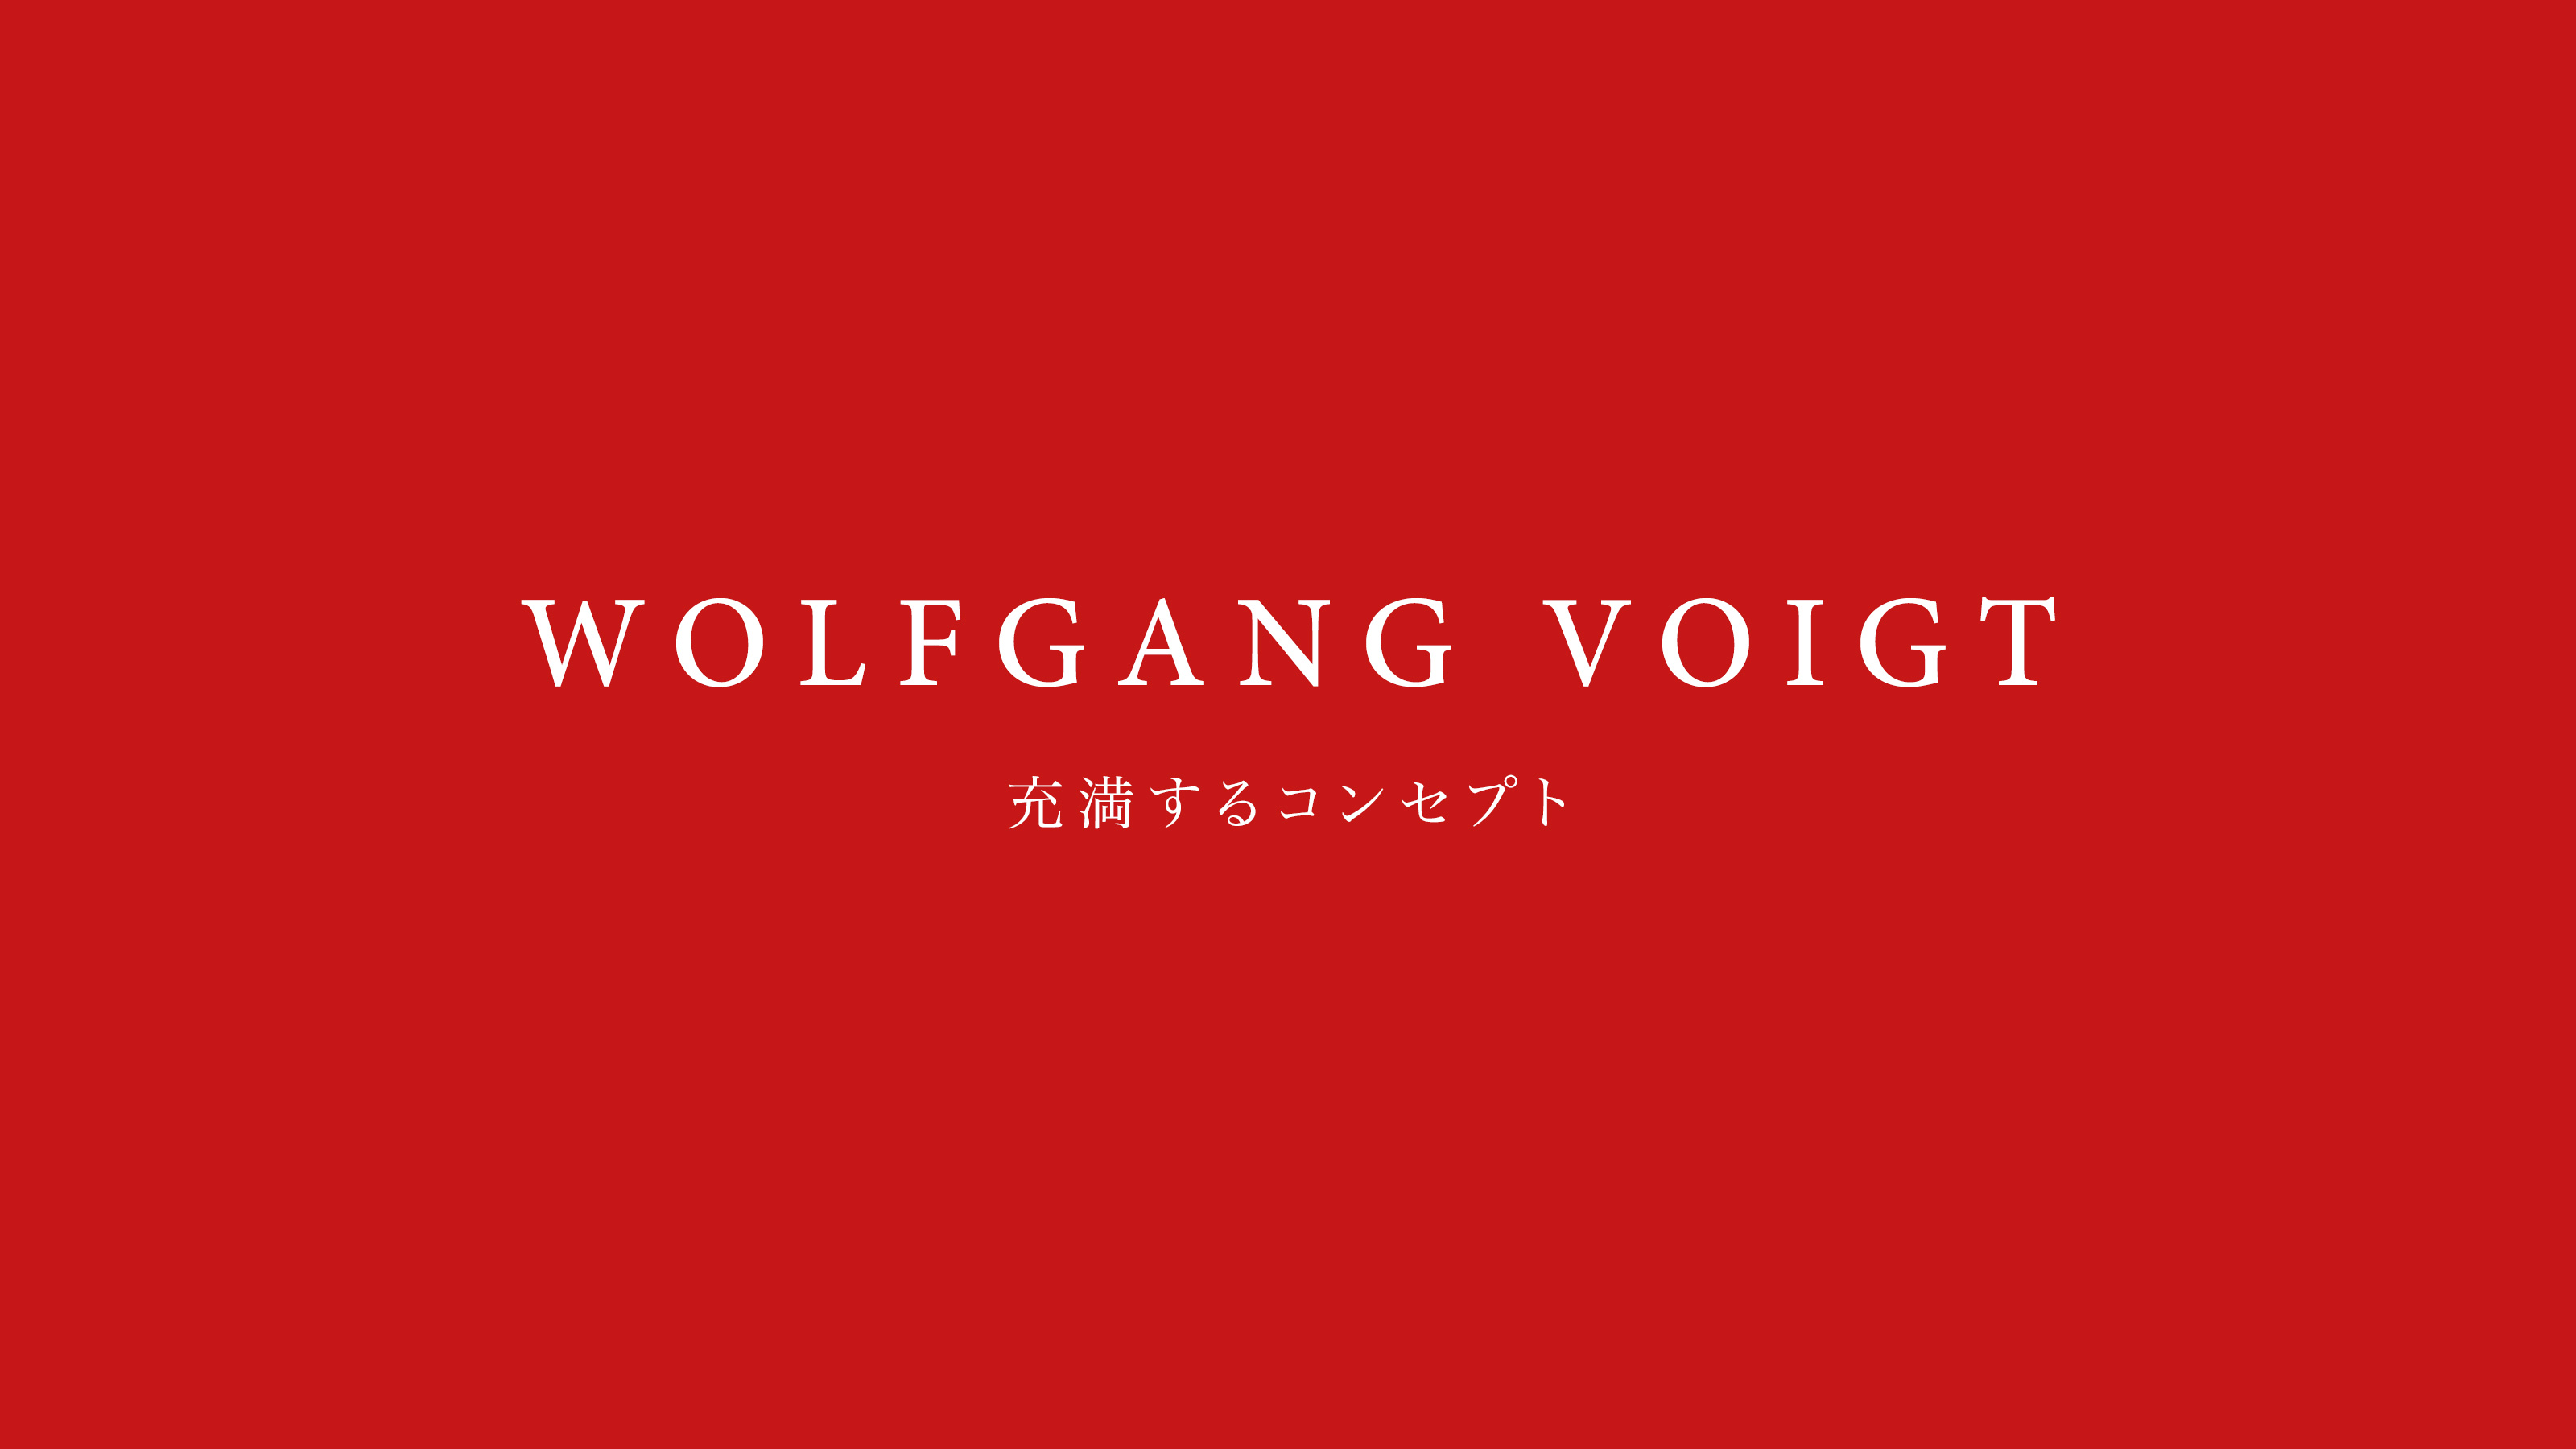 Wolfgang Voigt: 充満するコンセプト